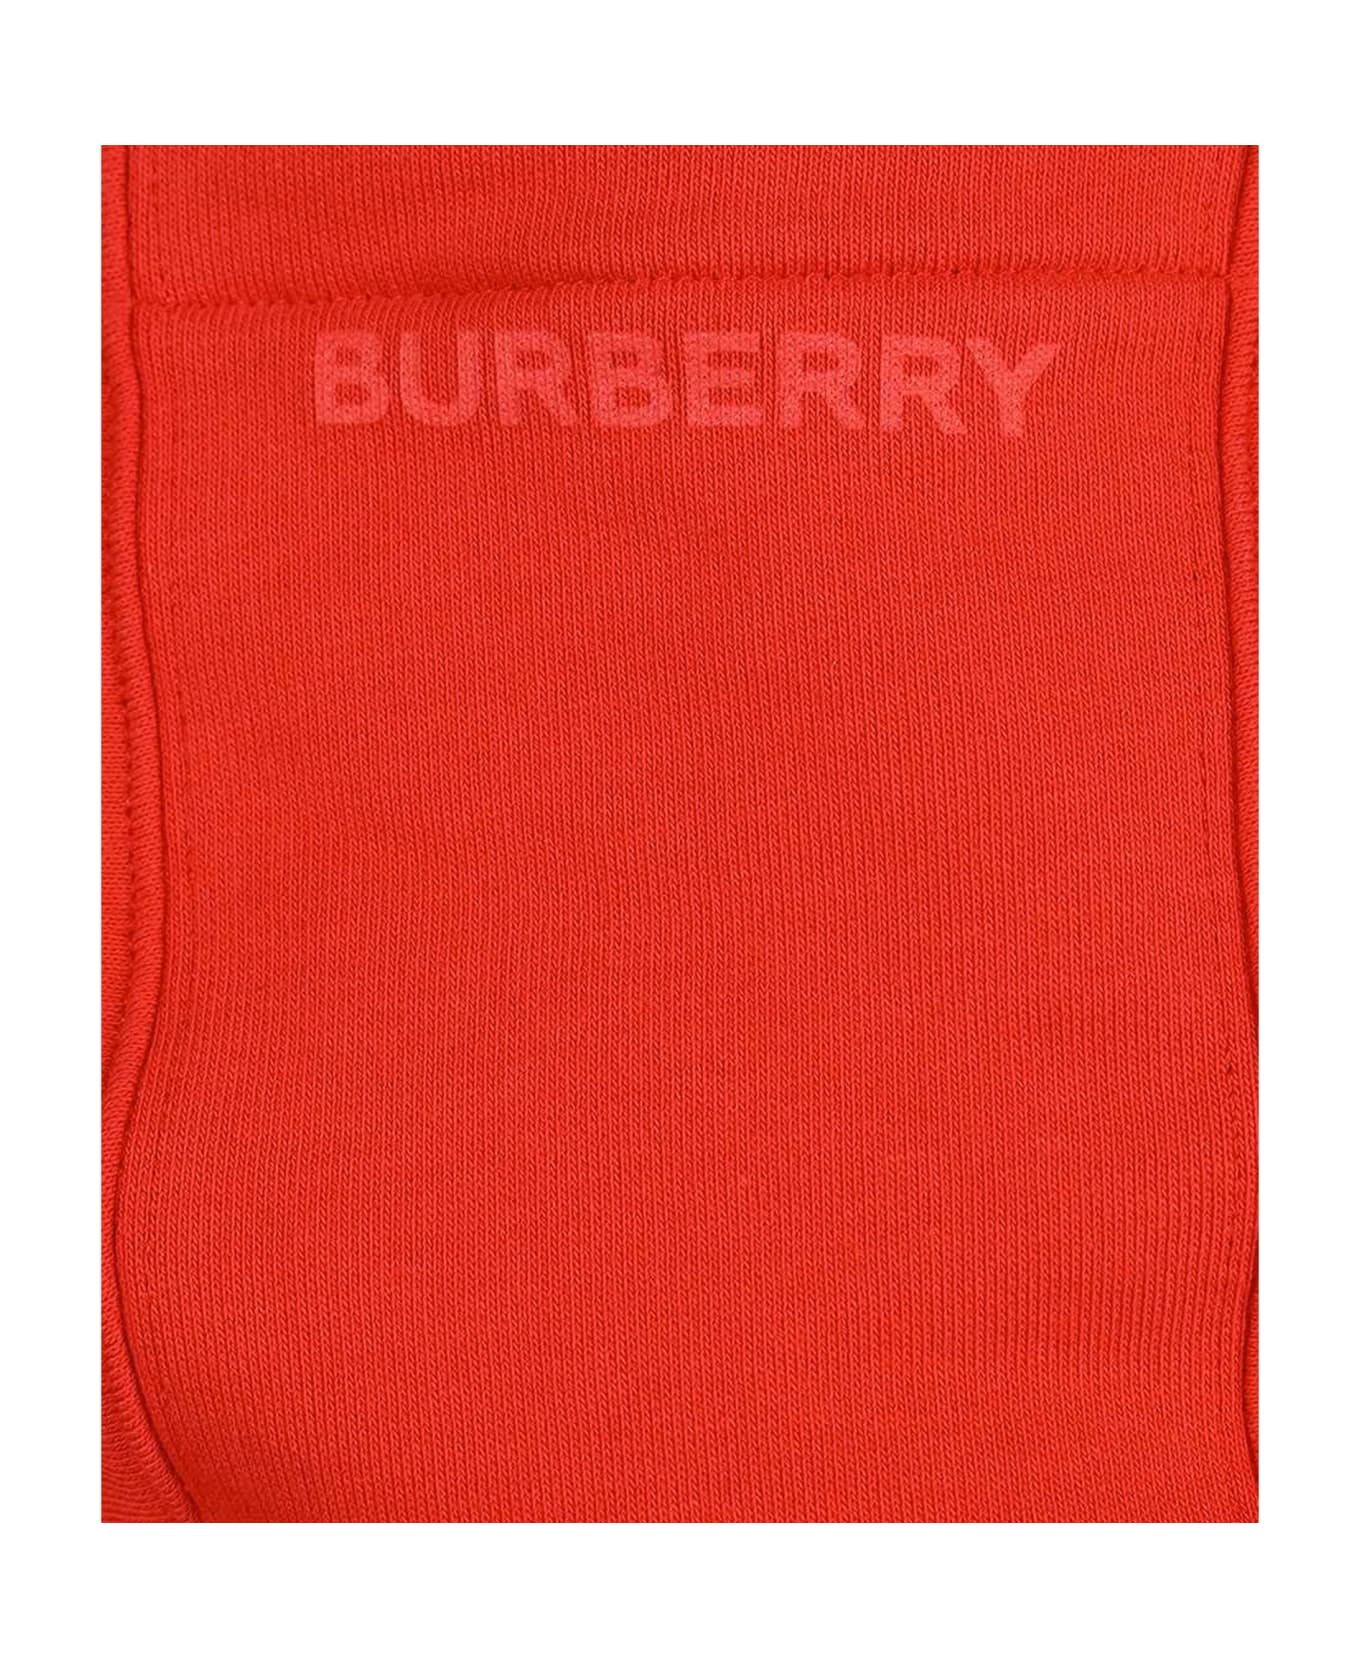 Burberry Love Hooded Sweatshirt - Red